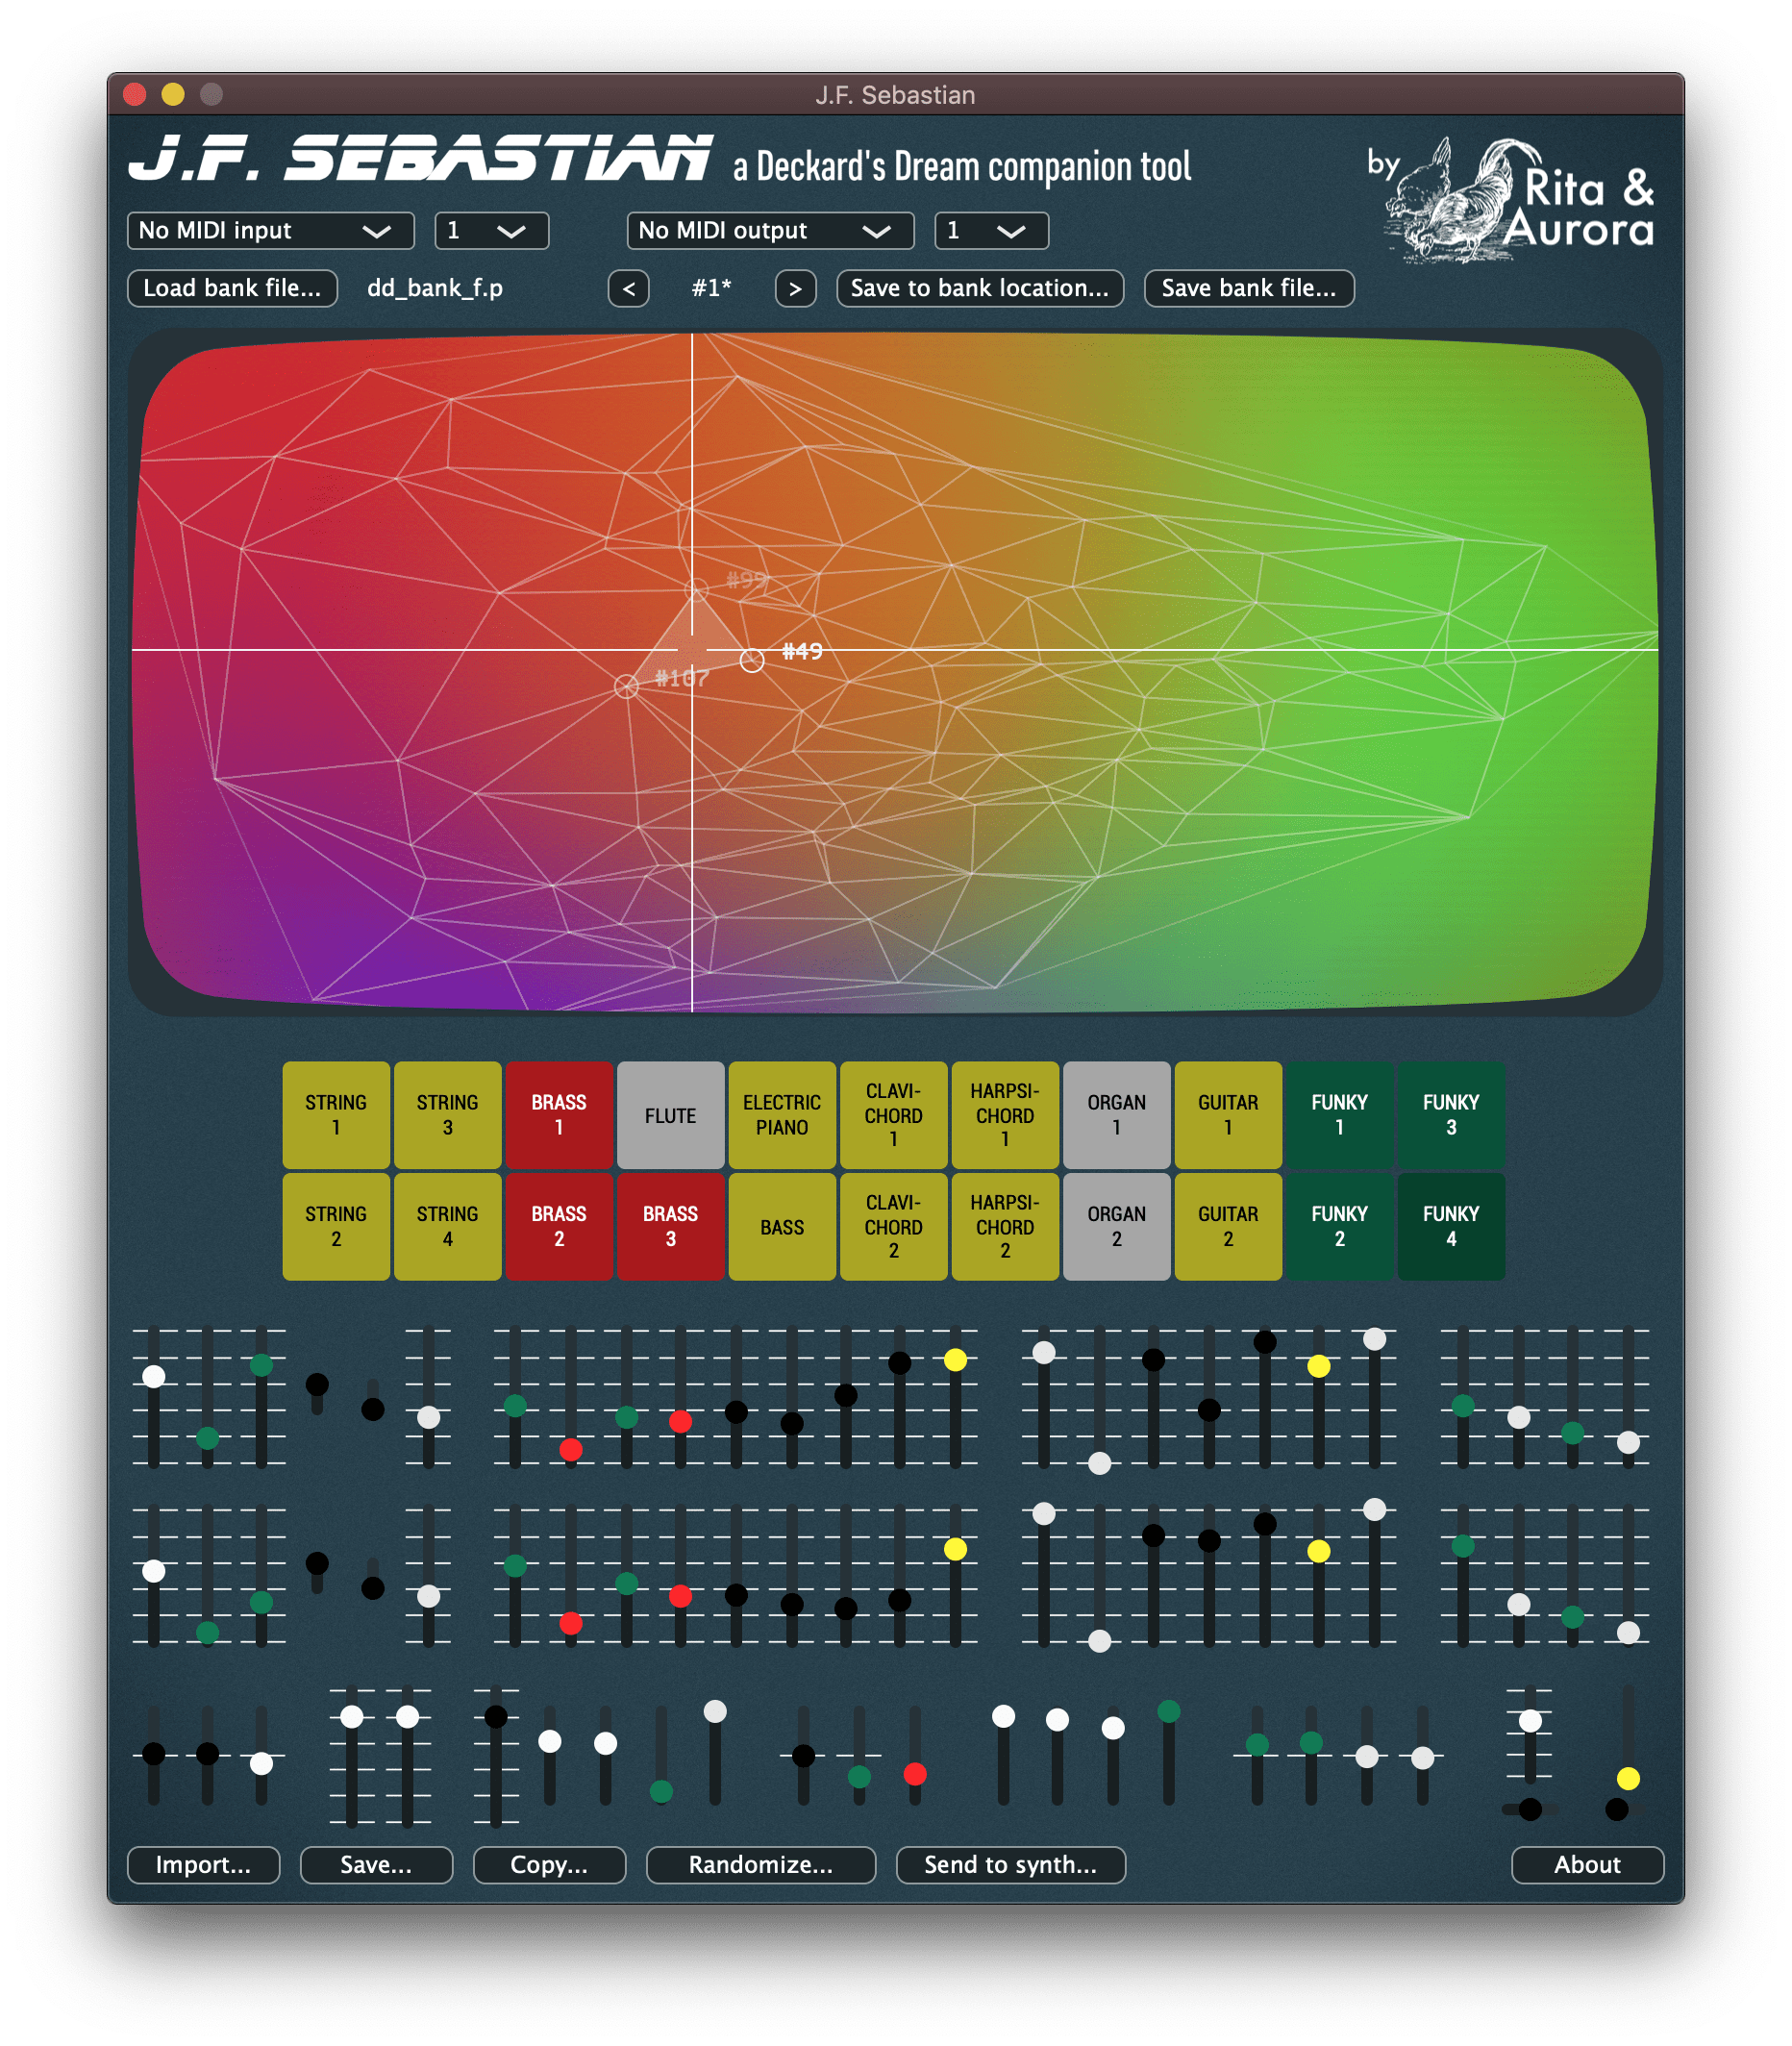 J.F. Sebastian a Deckard’s Dream Synthesizer Companion Tool